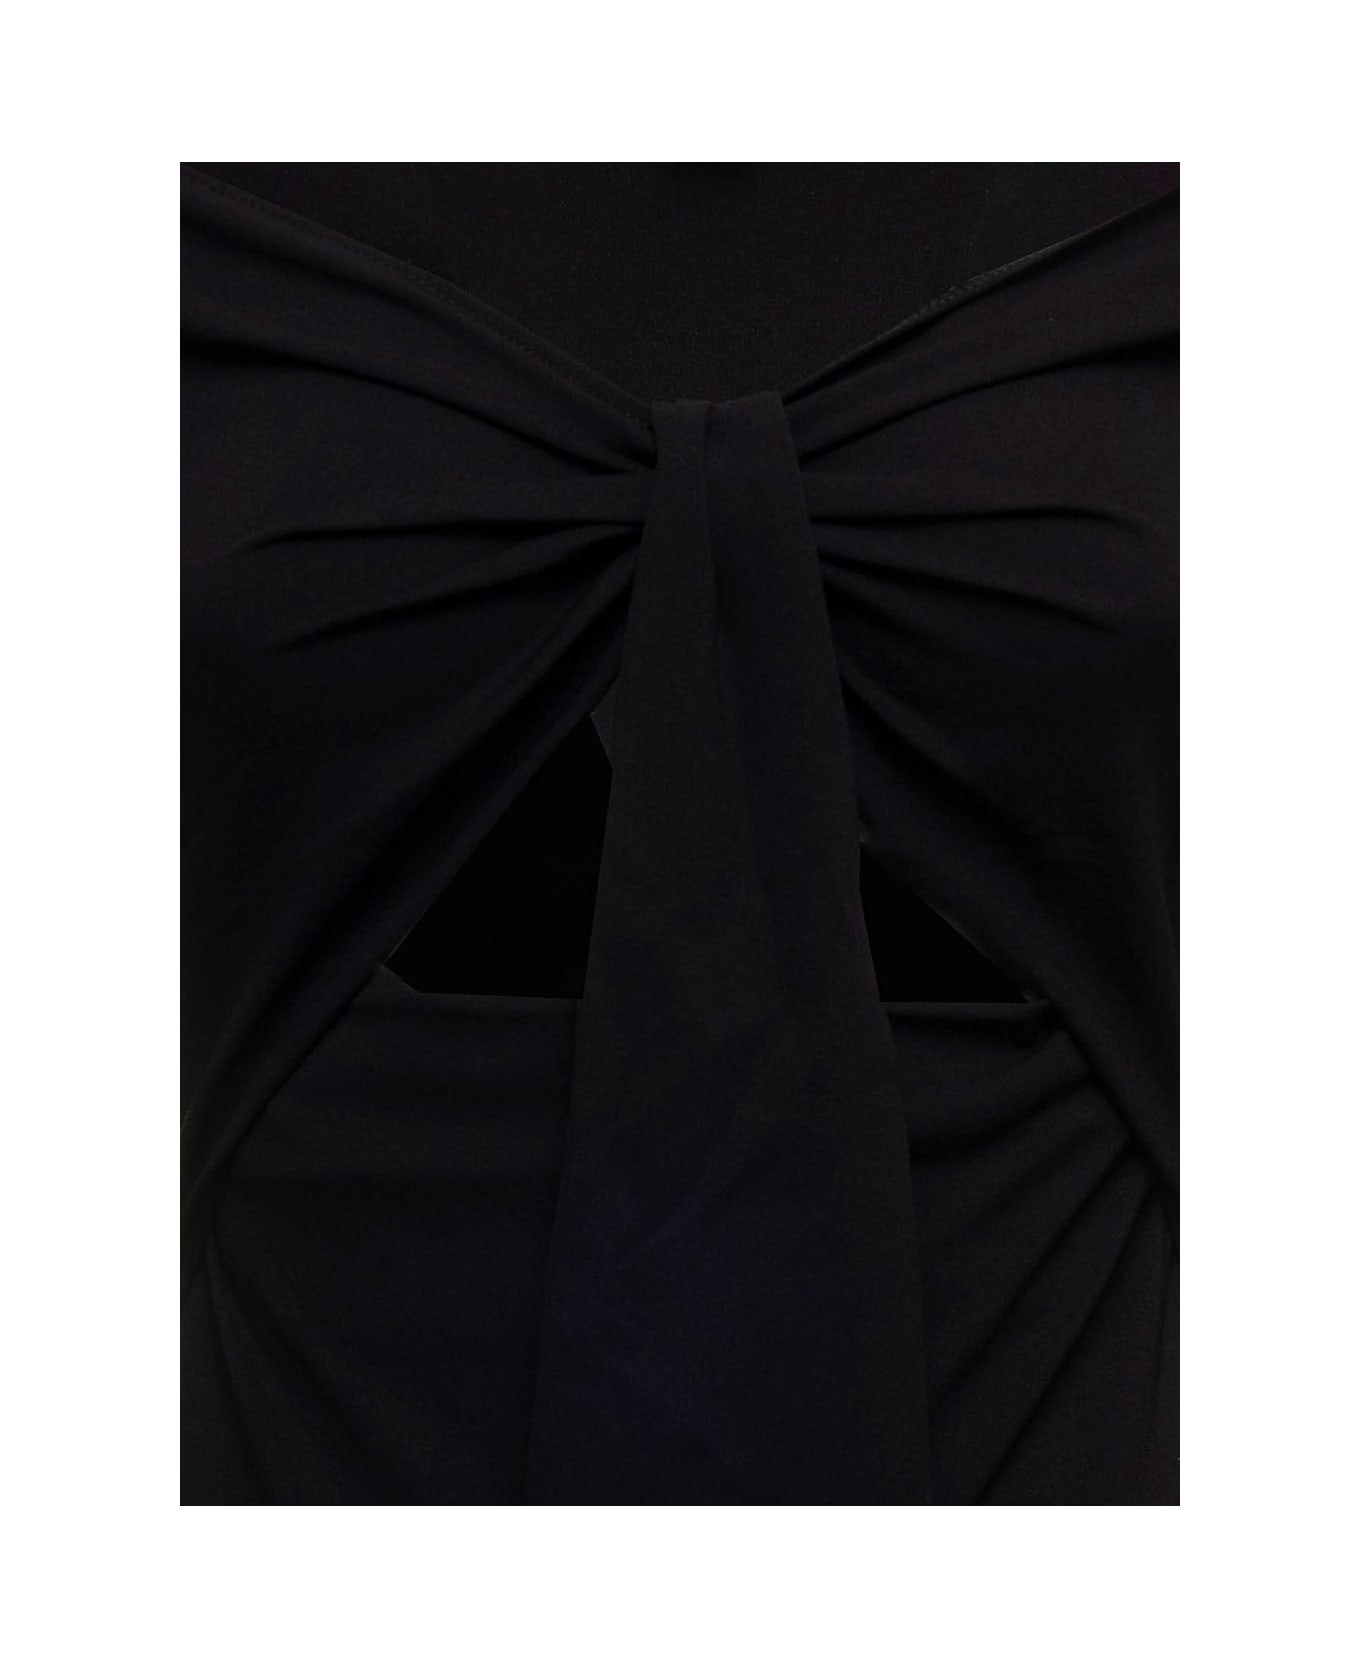 Alexander McQueen Black Stretch Fabric Body With Cut Out Inserts Alexander Mcqueen Woman - Black